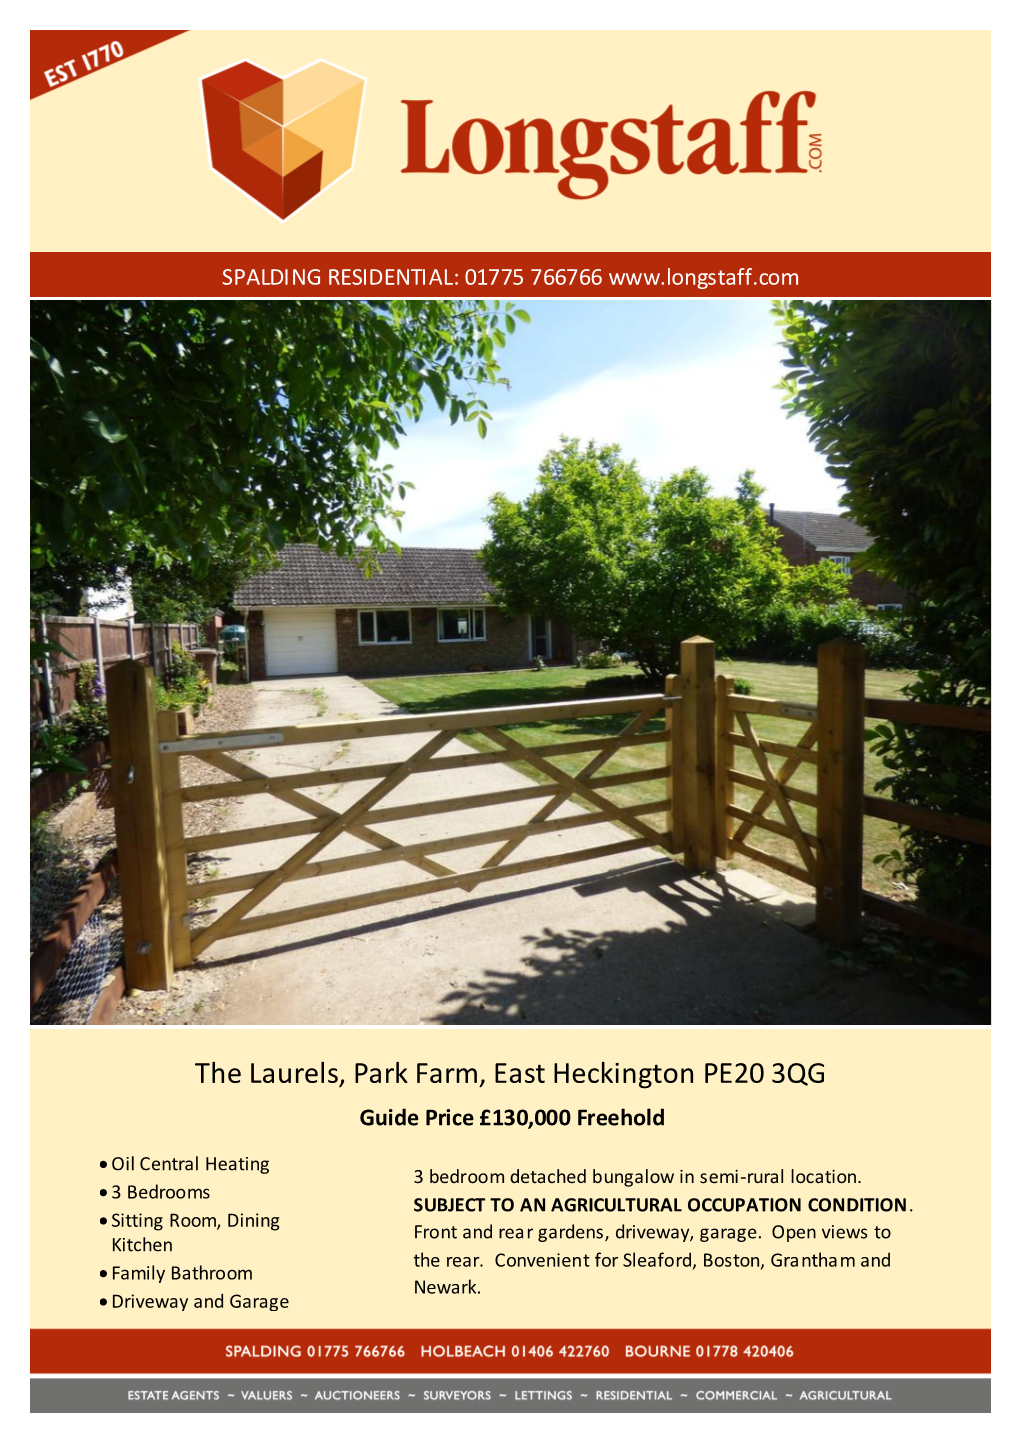 The Laurels, Park Farm, East Heckington PE20 3QG Guide Price £130,000 Freehold